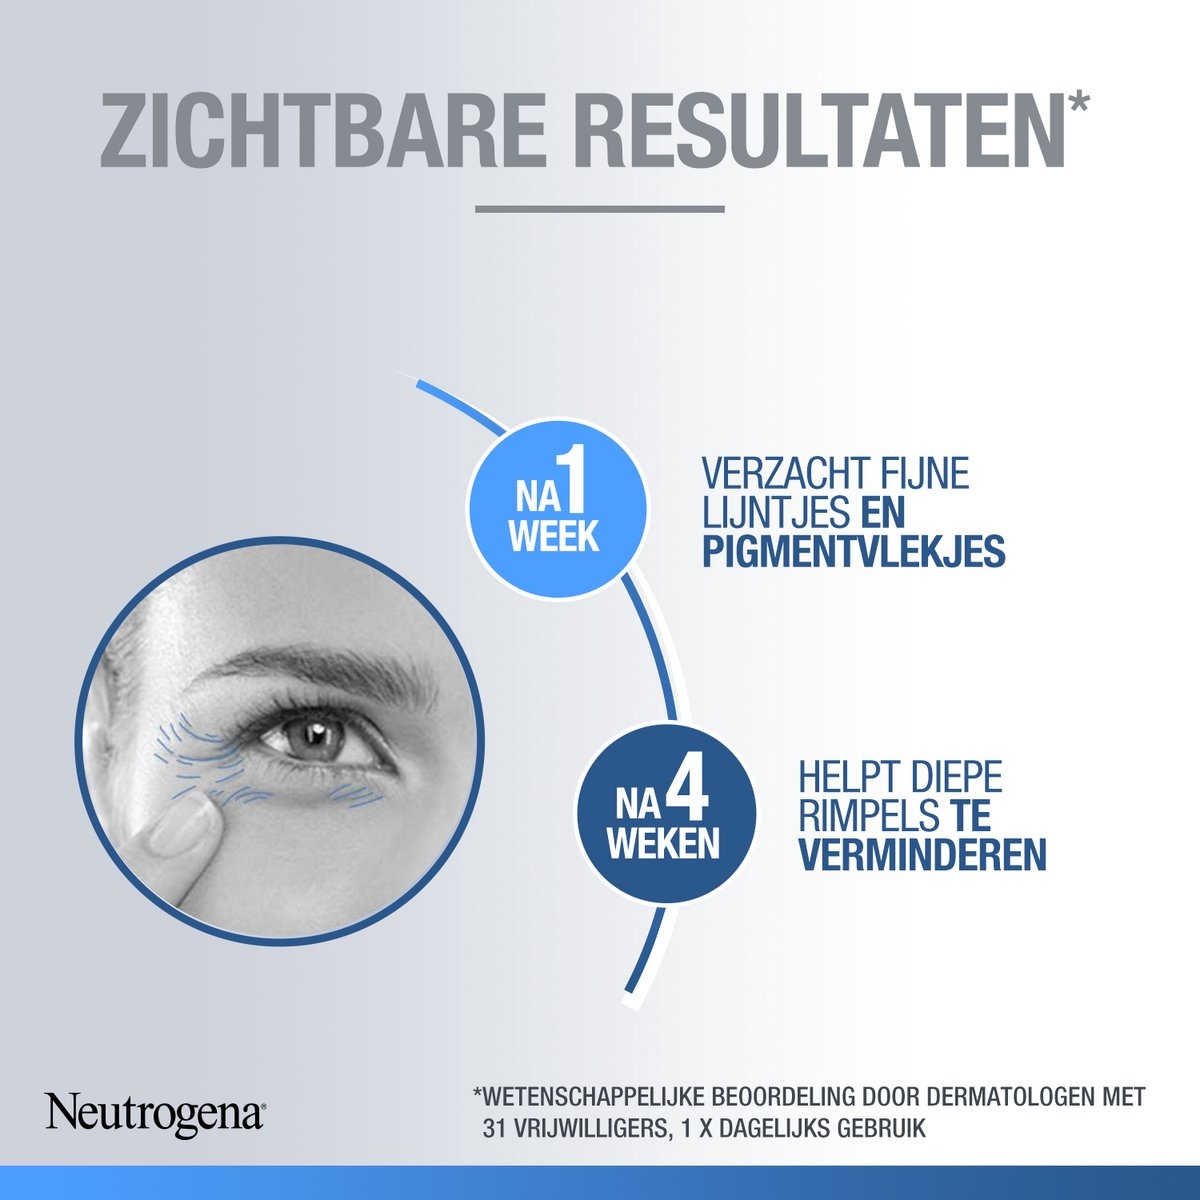 Neutrogena® Anti-Aging Retinol Boost+ - Emballage endommagé